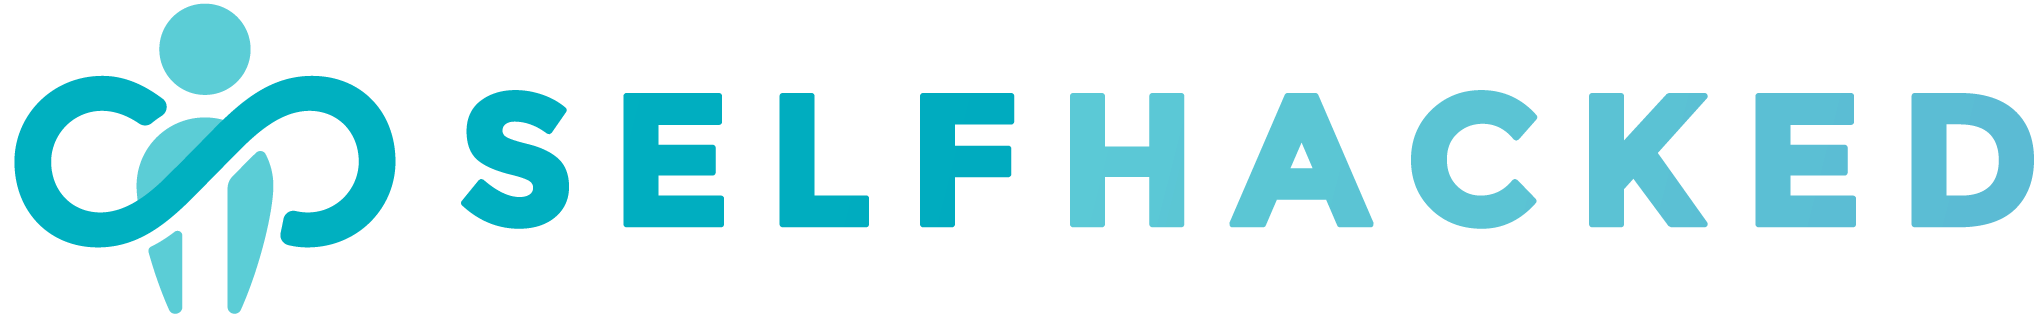 Selfhacked logo